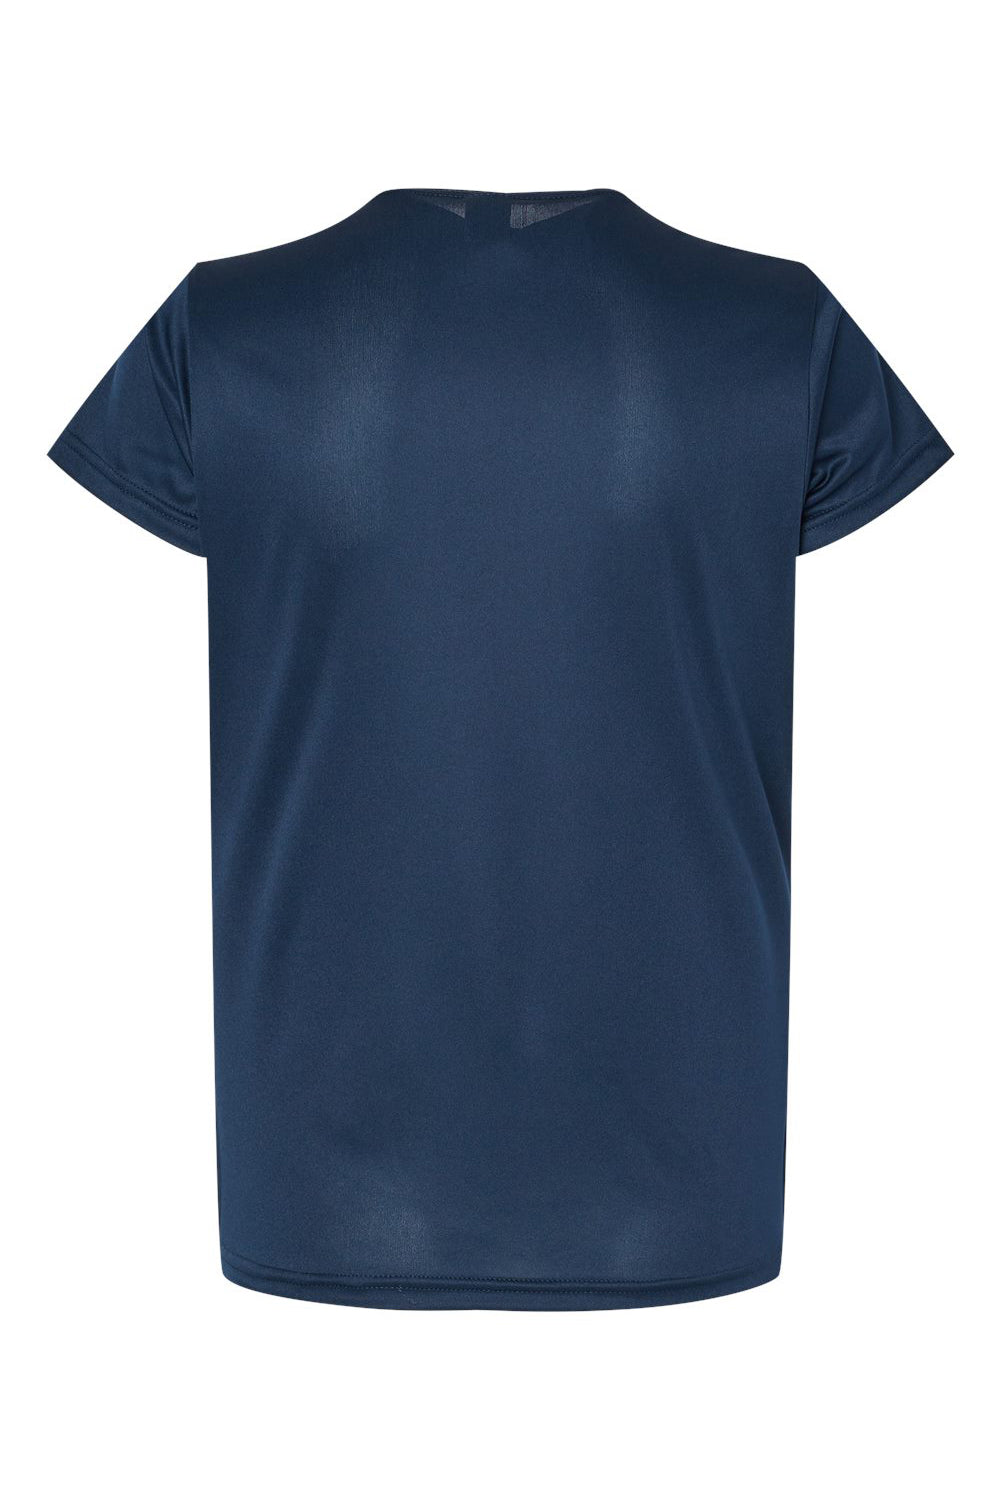 C2 Sport 5600 Womens Performance Moisture Wicking Short Sleeve Crewneck T-Shirt Navy Blue Flat Back